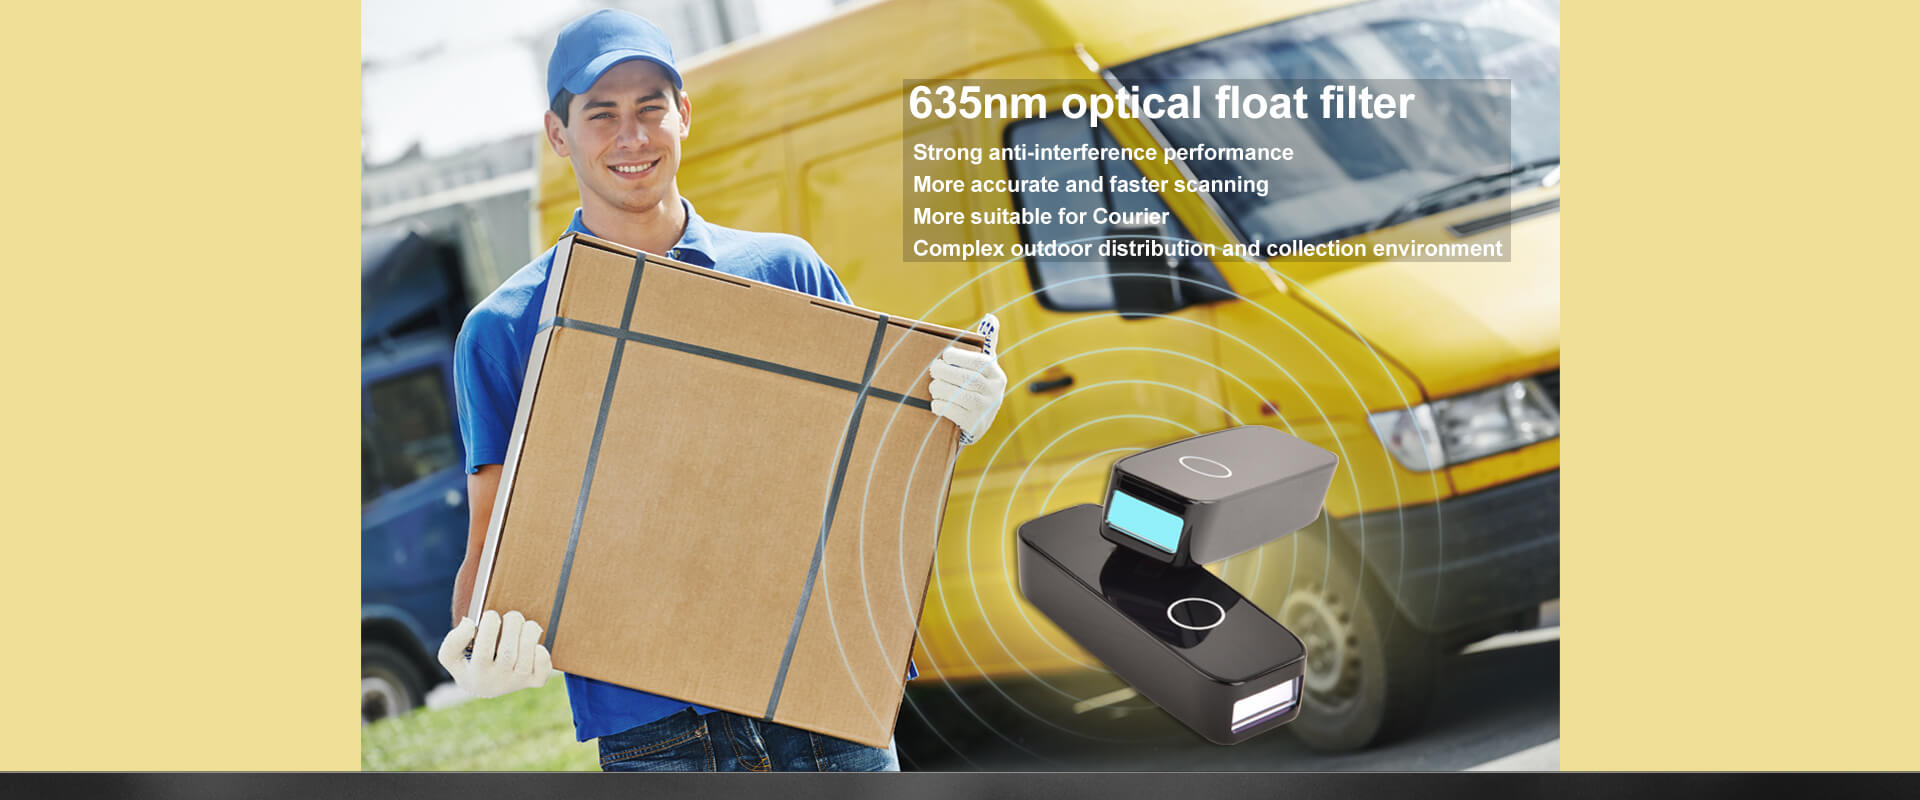 635mm opticle float filter scanner